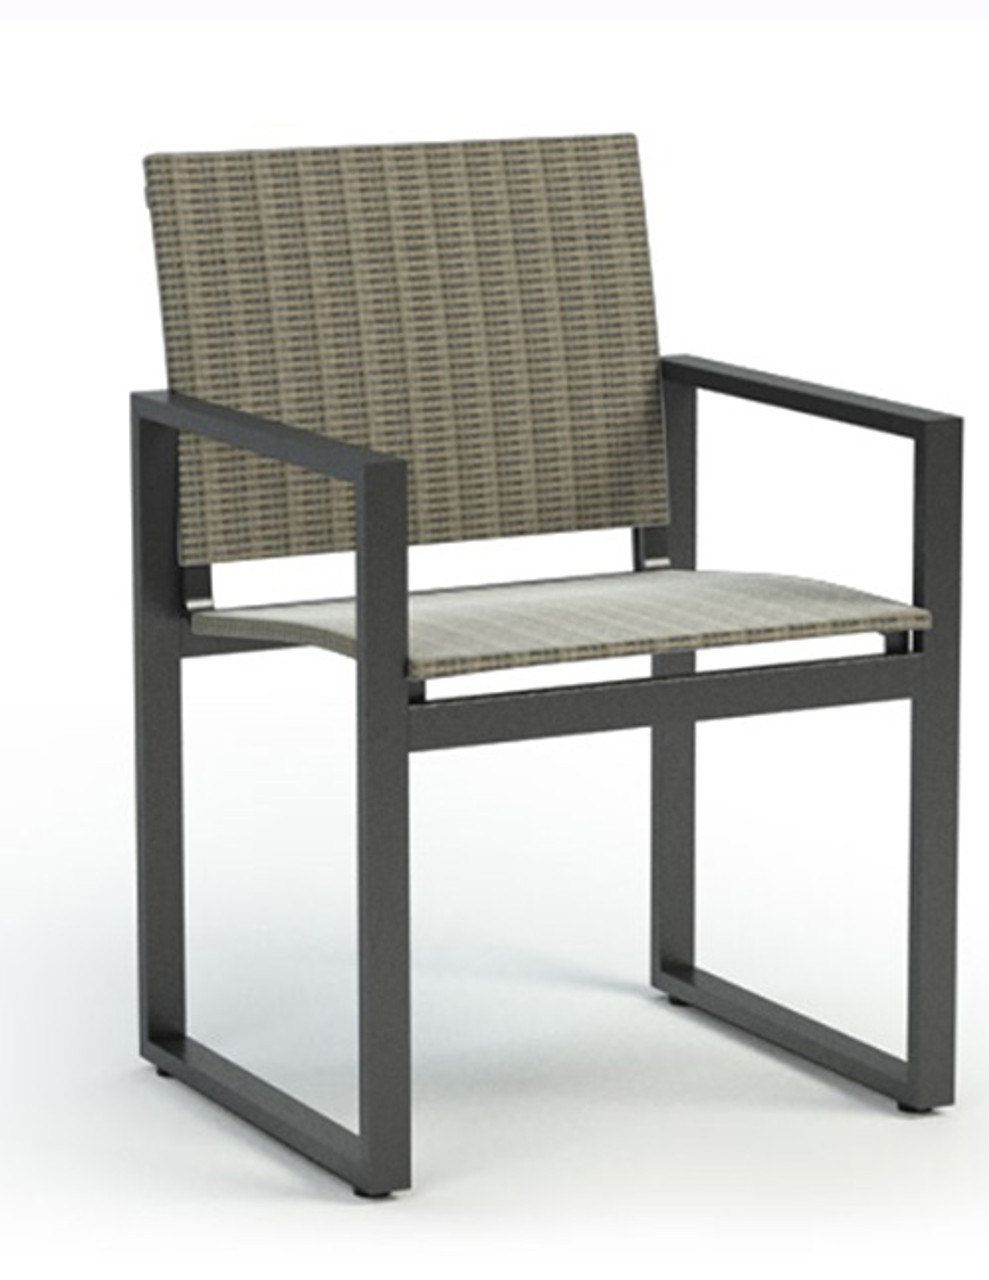 Homecrest Allure Aluminum Sling Cafe Chair